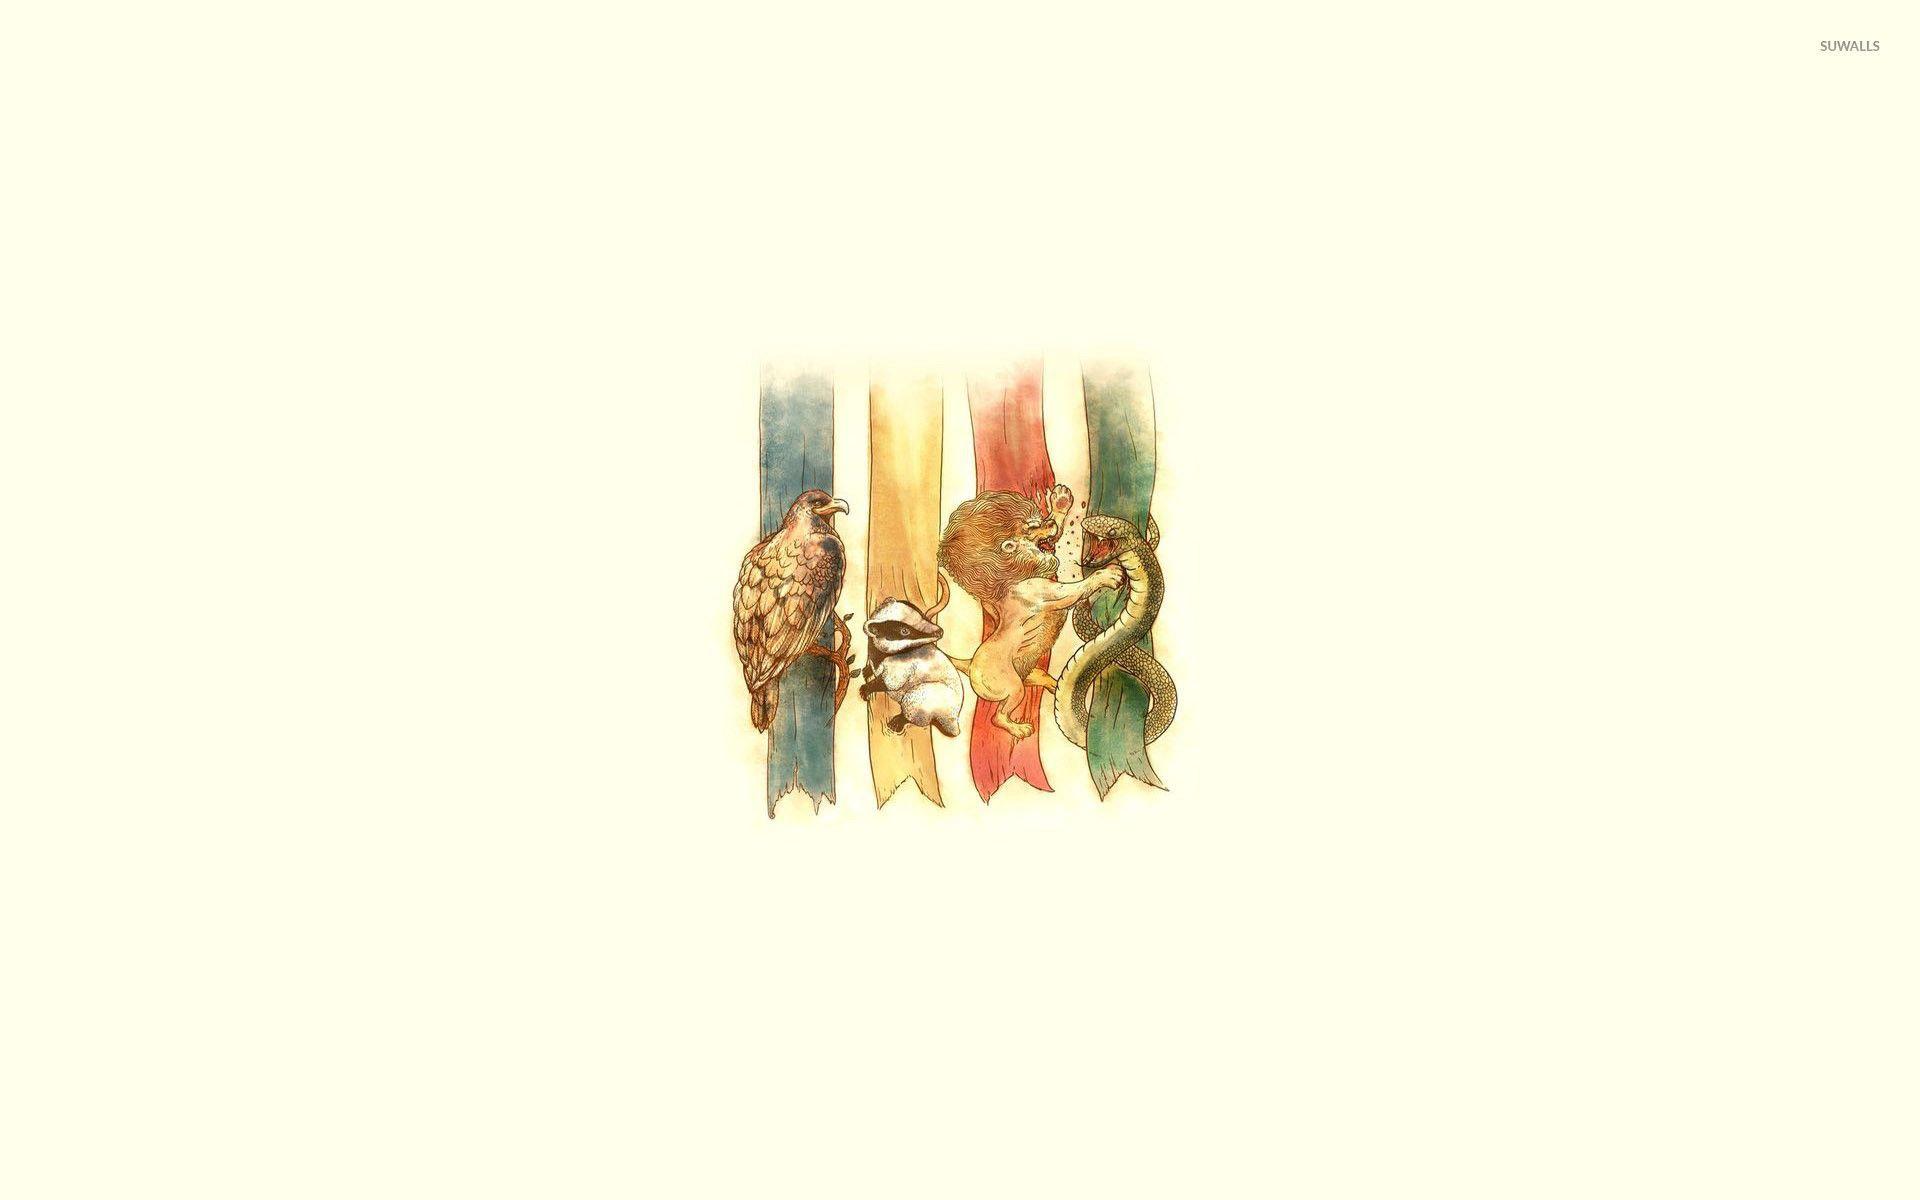 Harry Potter Slytherin Wallpaper